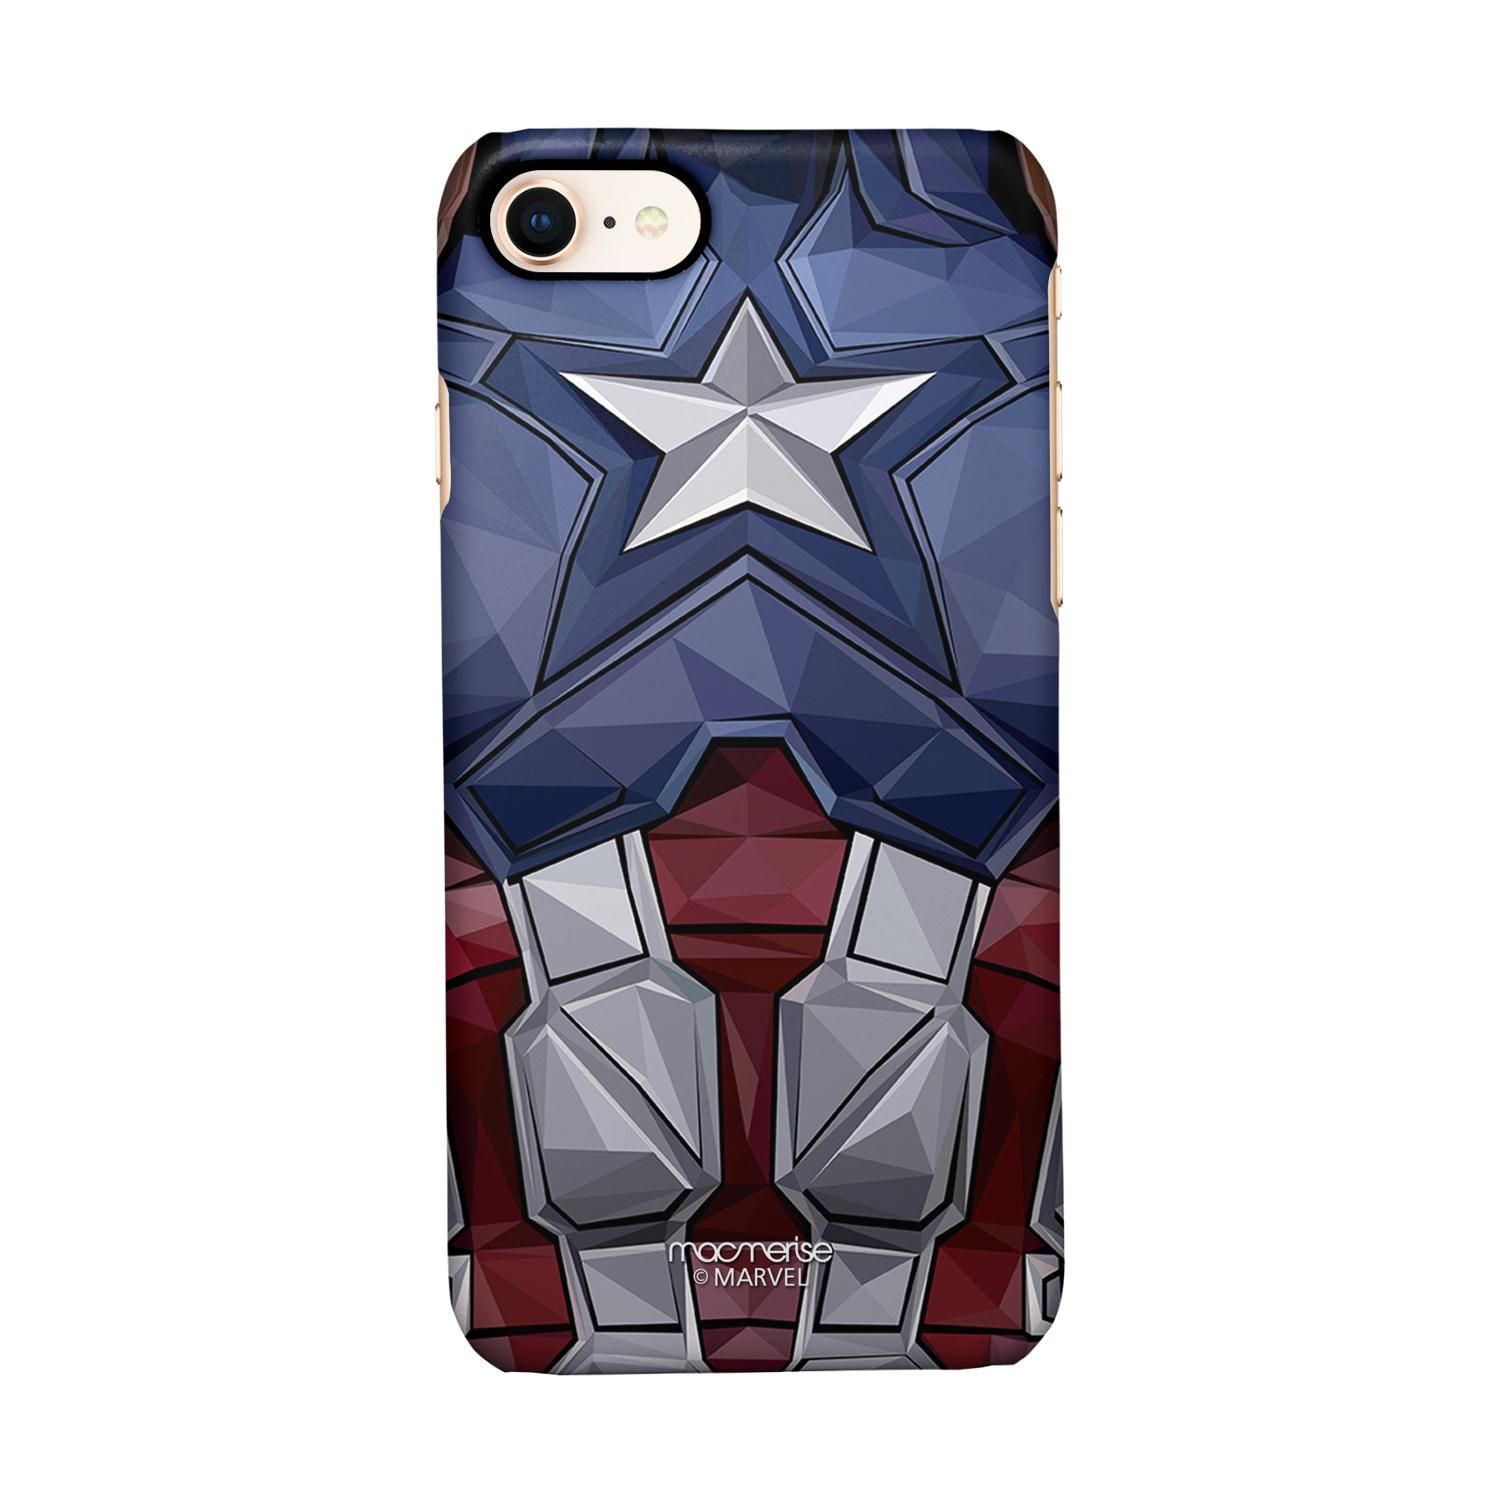 Buy Captain America Vintage Suit - Sleek Phone Case for iPhone 8 Online